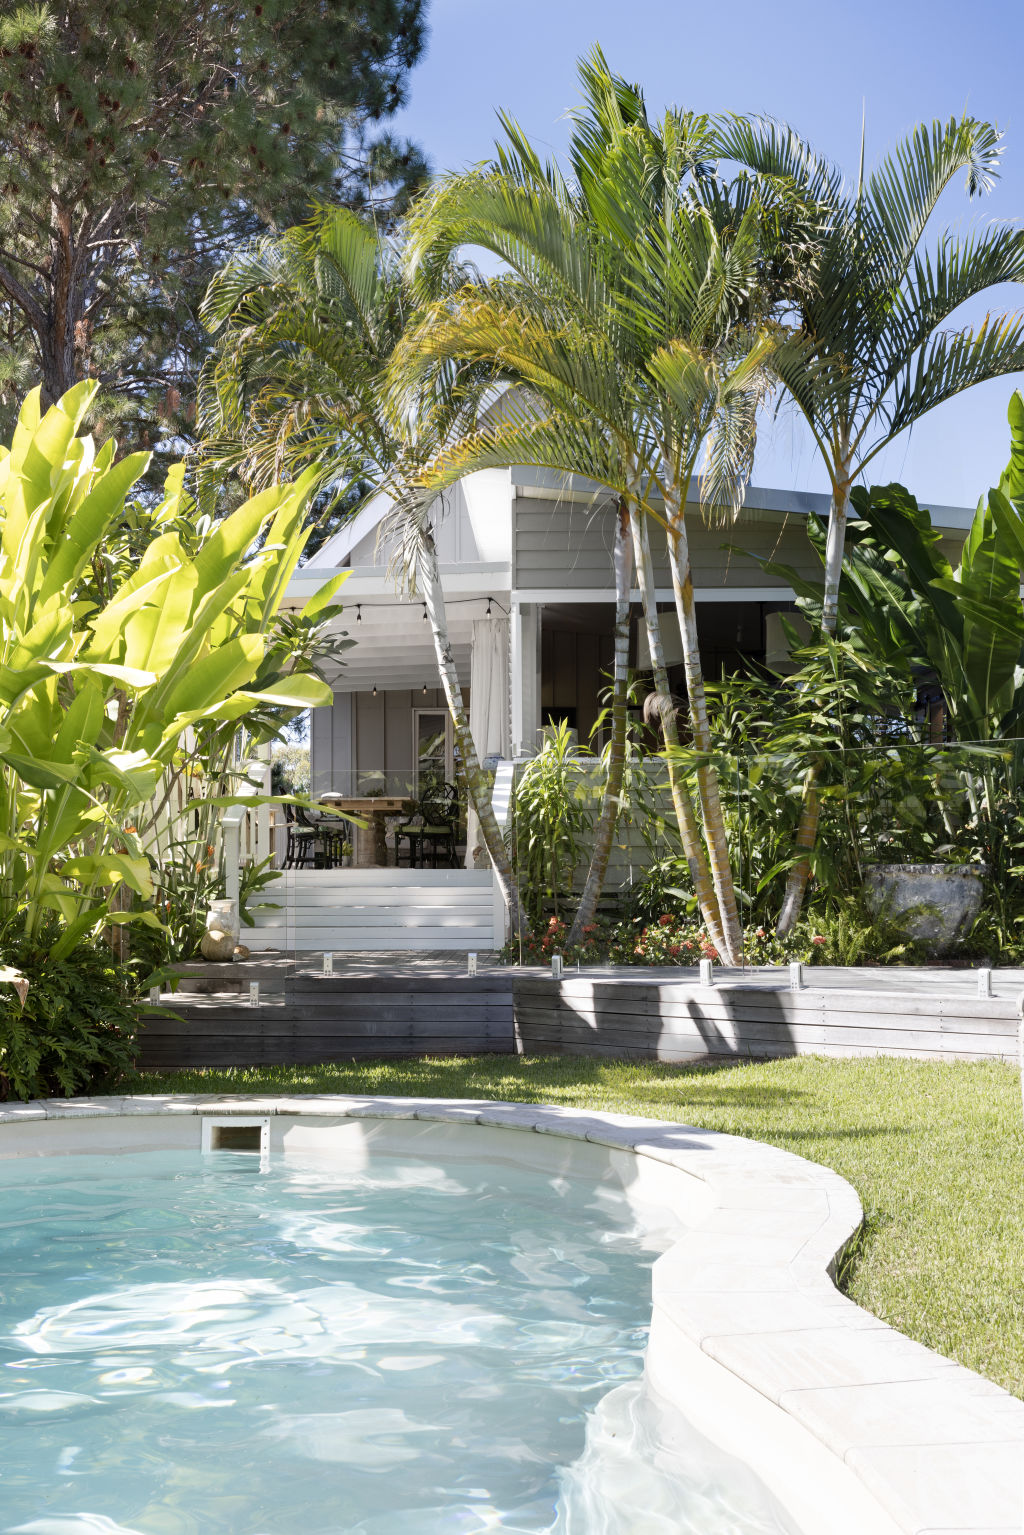 Using a landscape designer can help elevate your backyard. Photo: The Design Villa